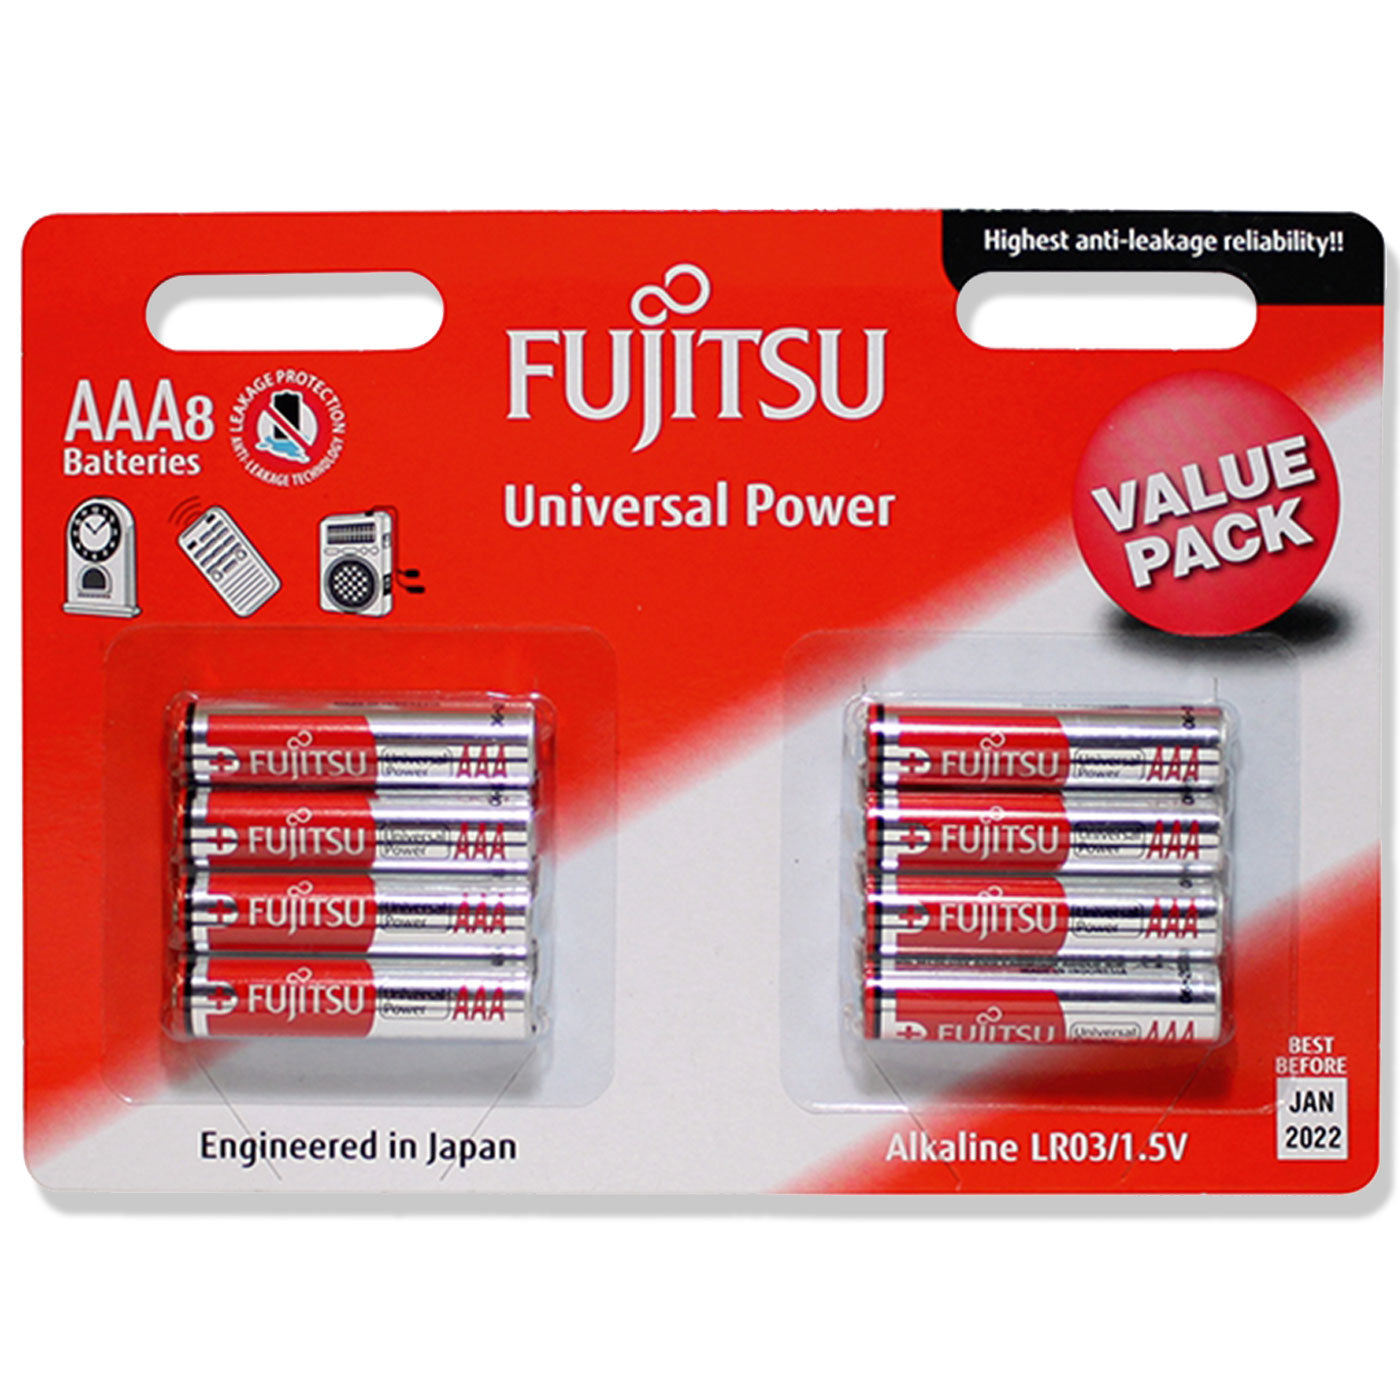 FUJITSU BATTERIES AAA UNIVERSAL 8 PACK 1.5V POWER